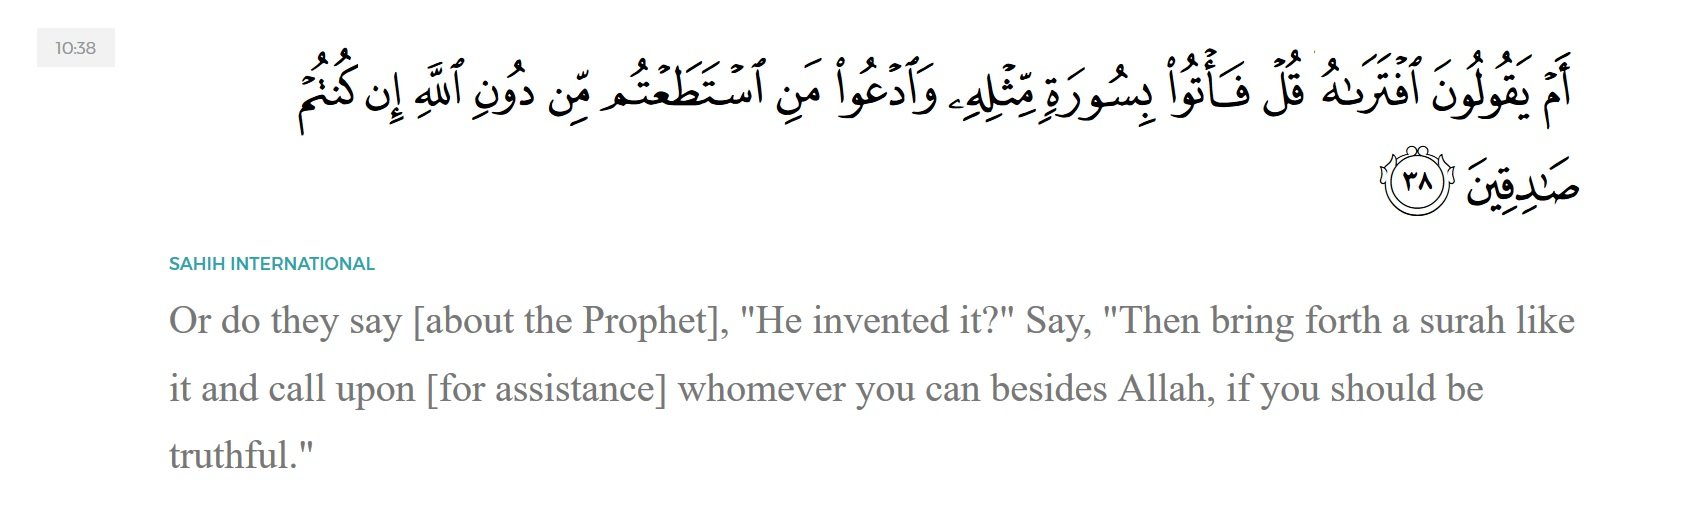 Quran challange1